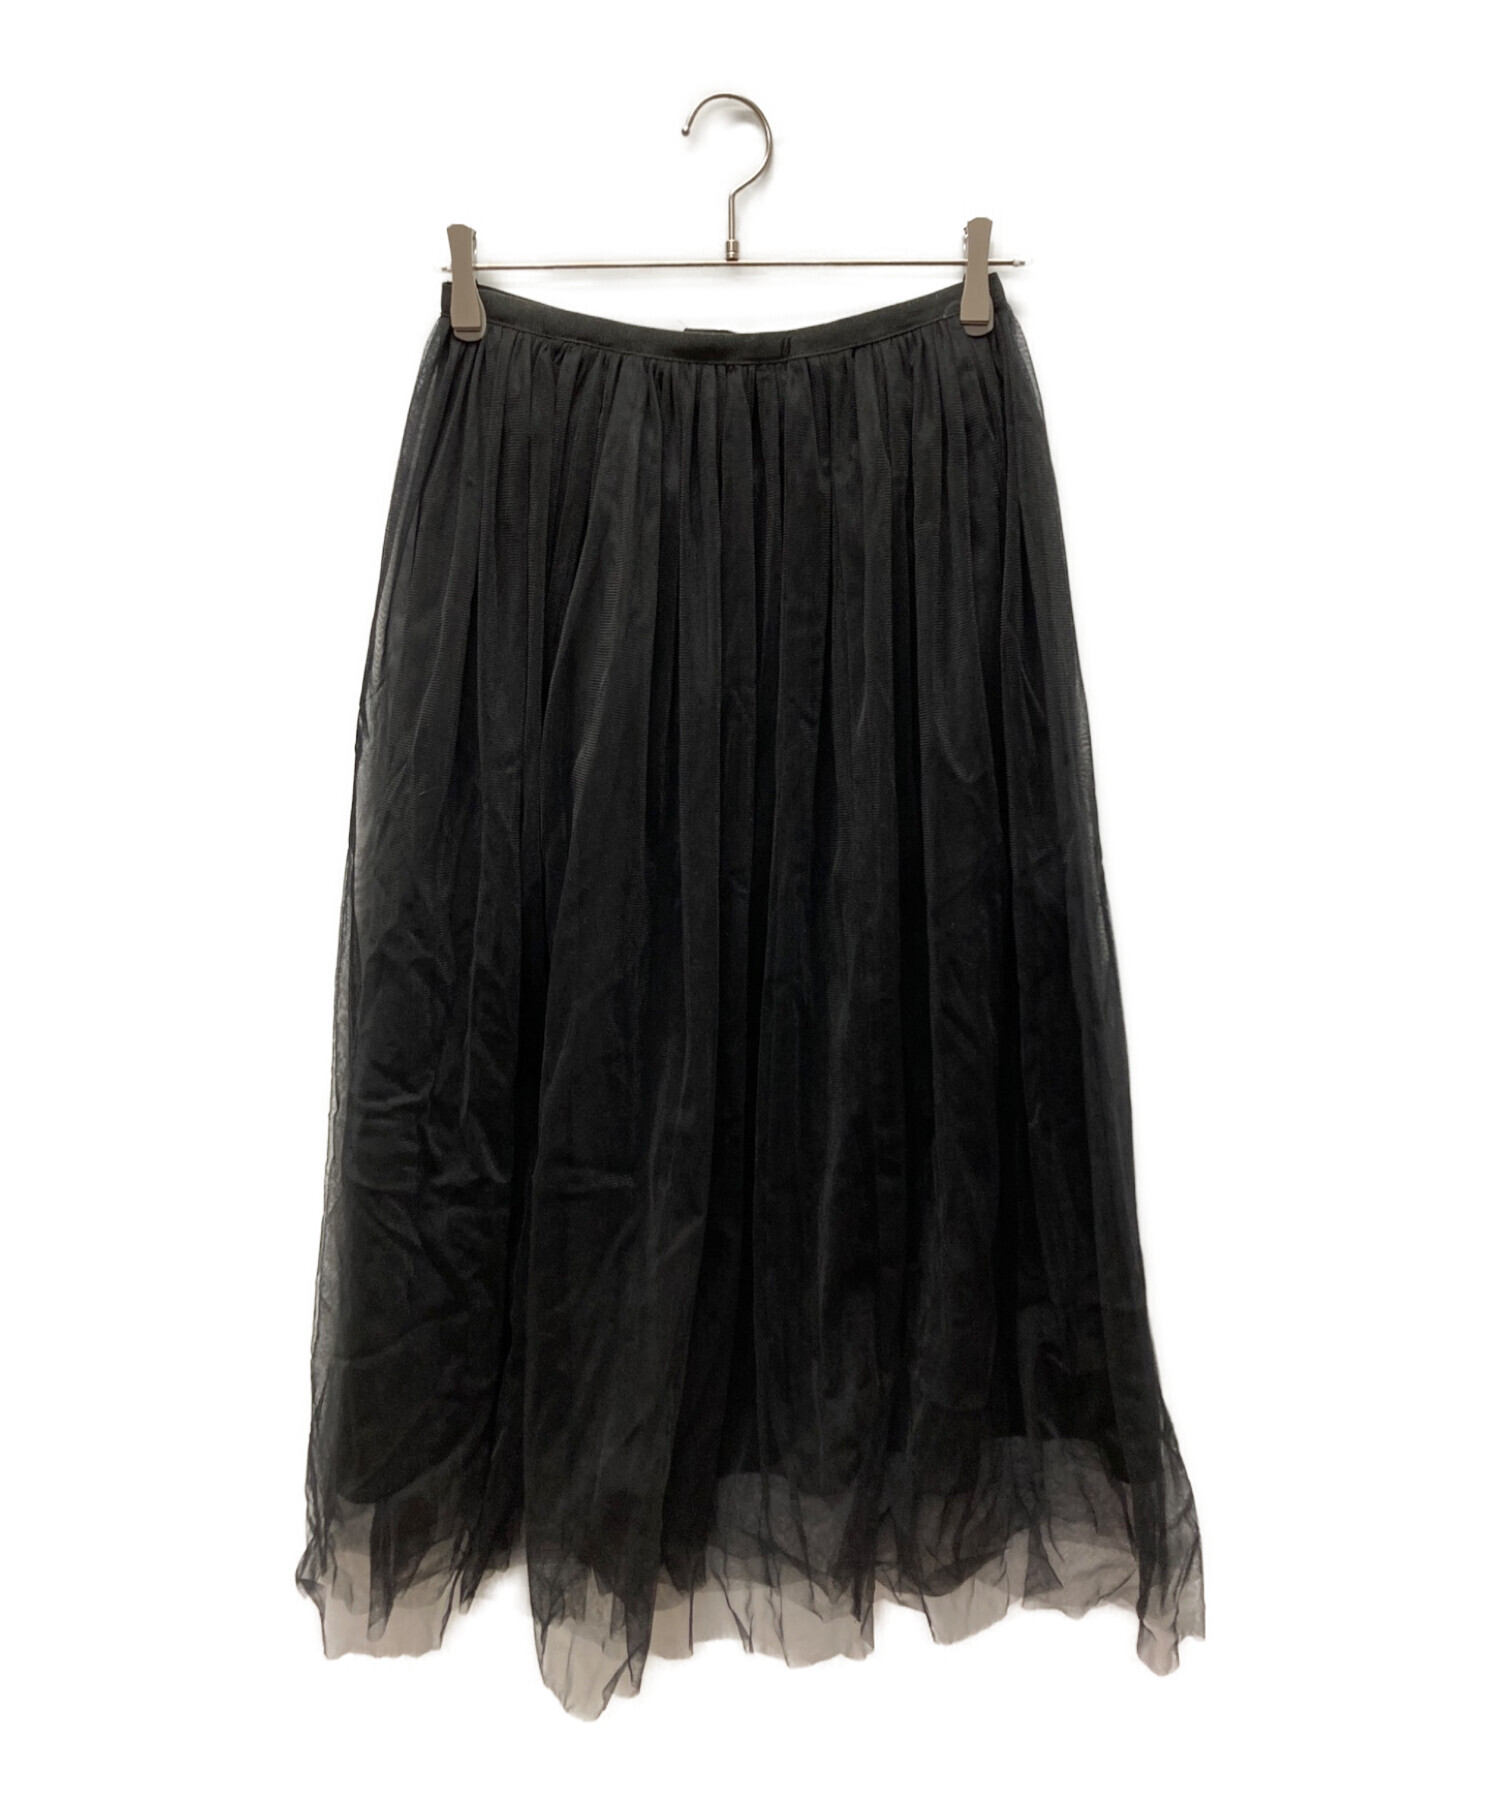 UNITED ARROWS (ユナイテッドアローズ) チュール ギャザースカート ブラック サイズ:38